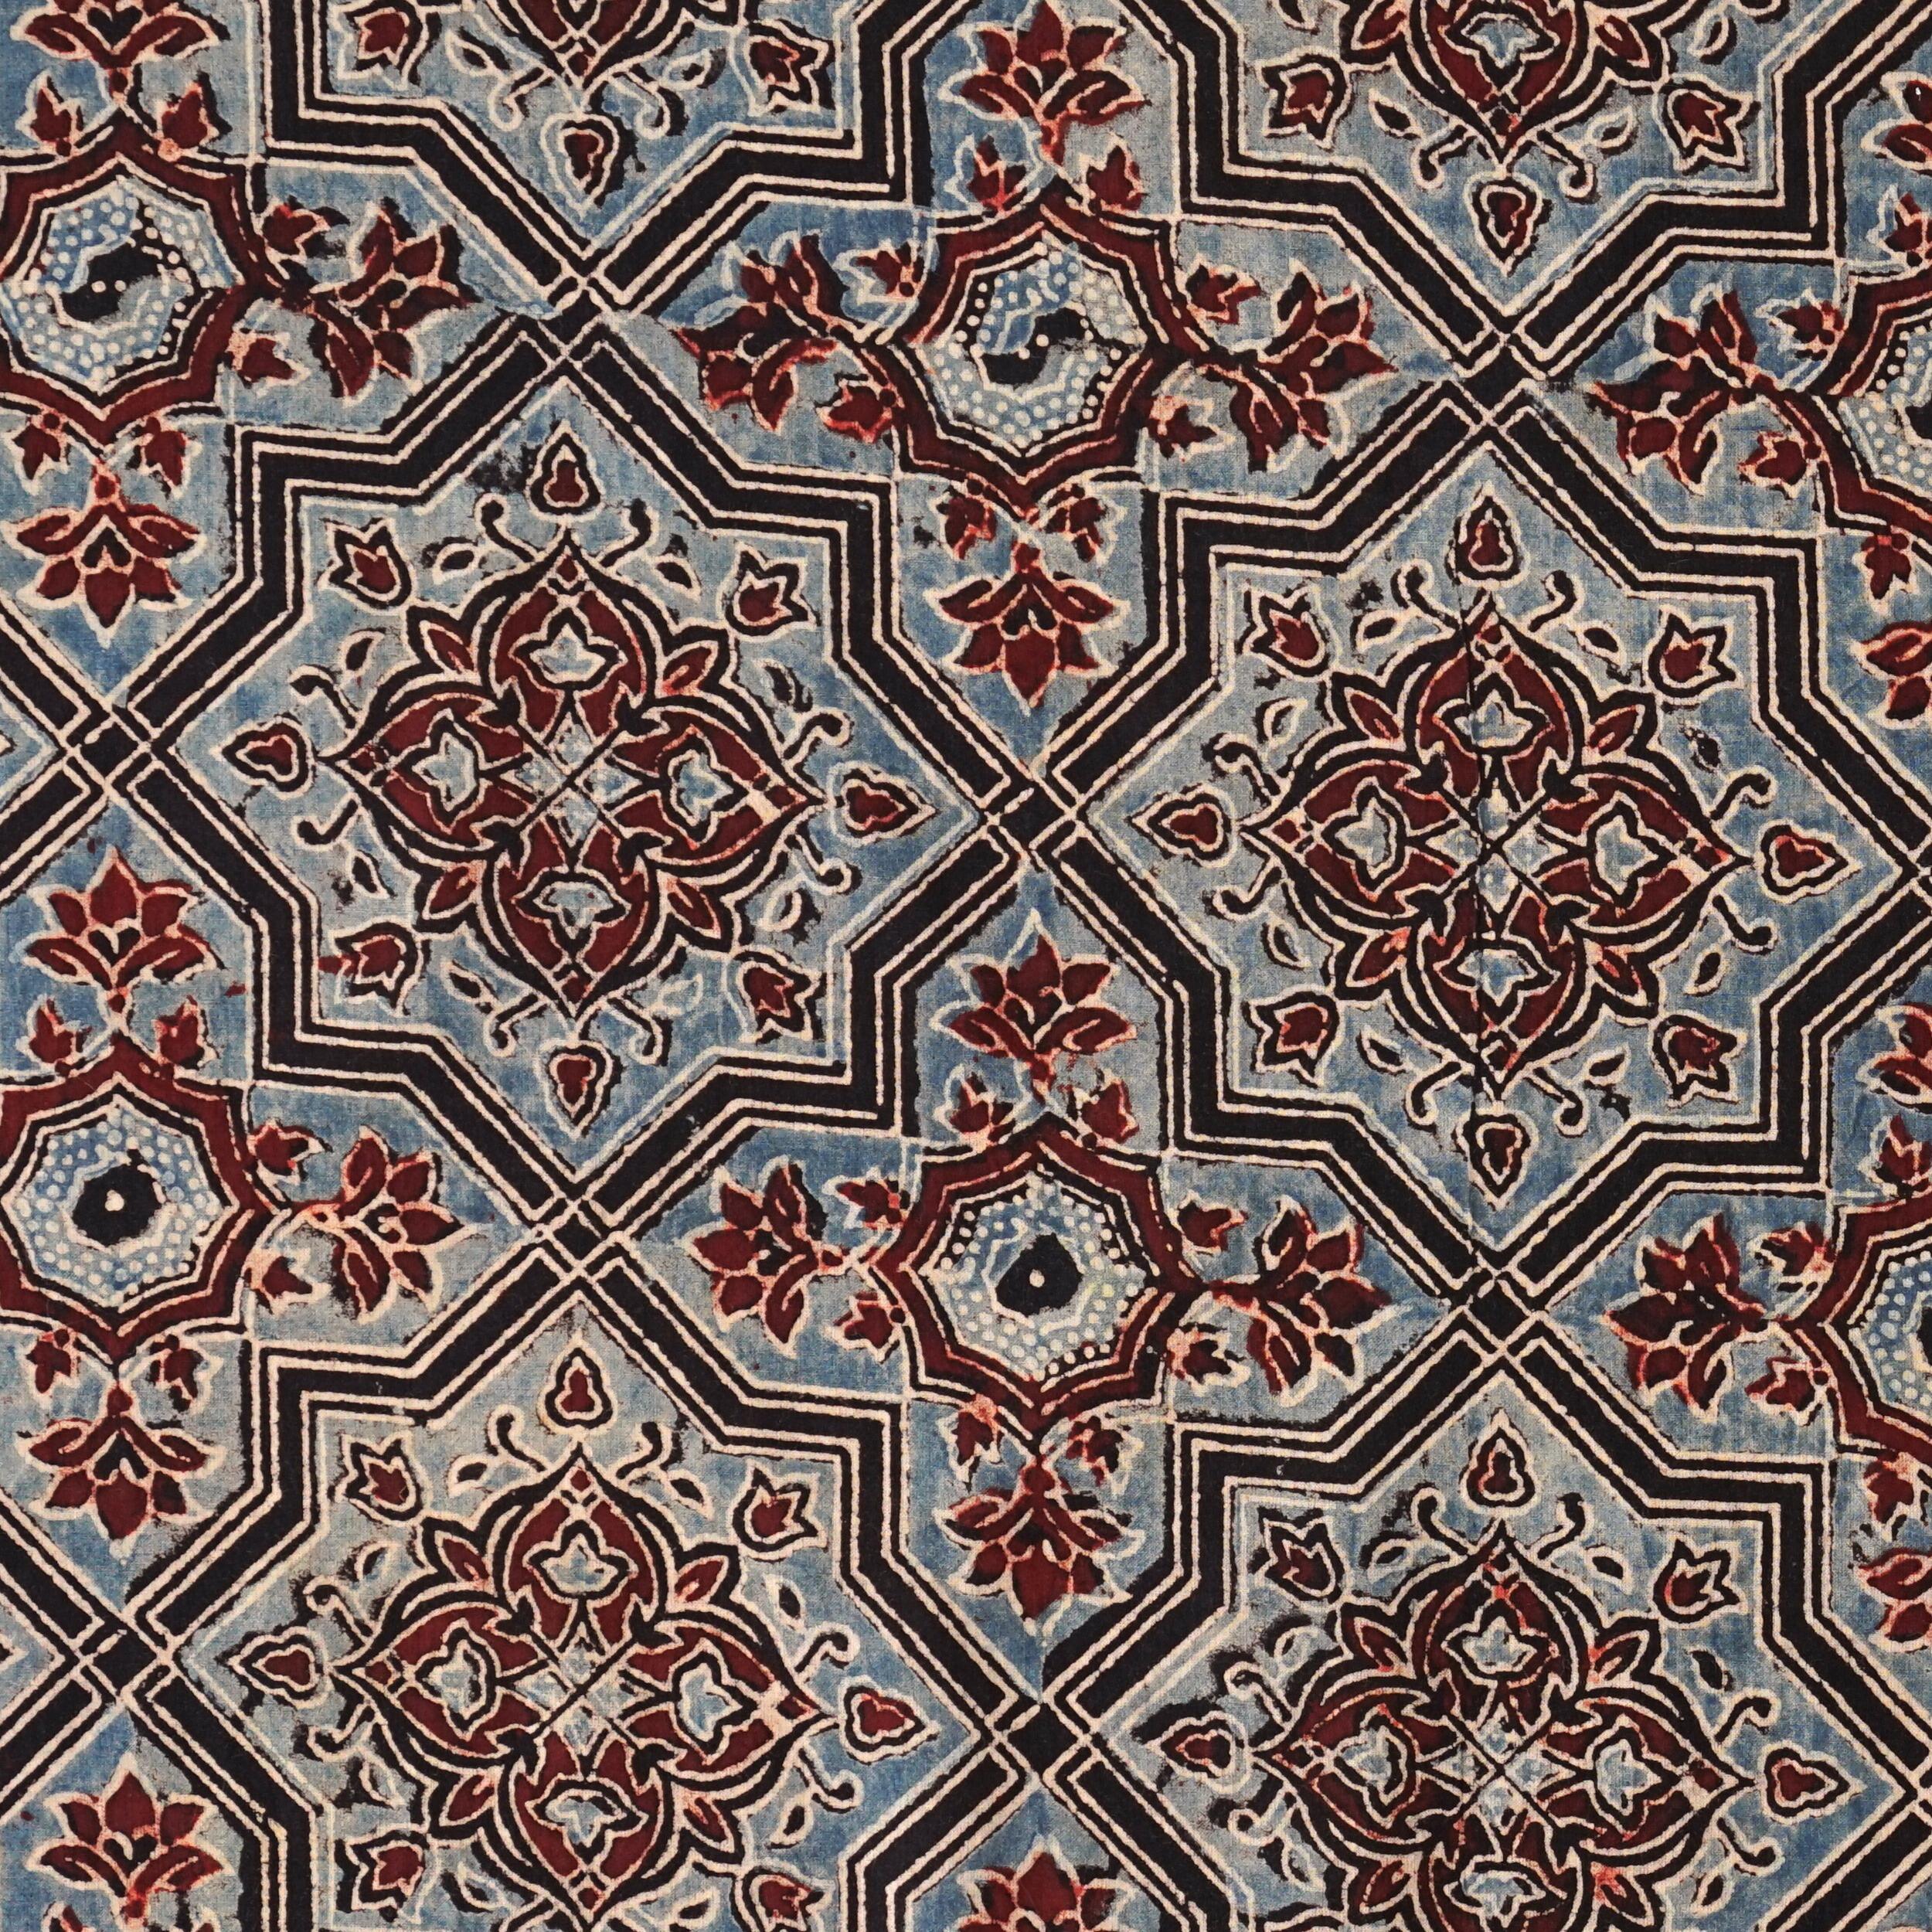 North Indian Block-Printed Cotton - Aaina Mahal Design - Alizarin Red, Indigo and Black Dyes - Flat